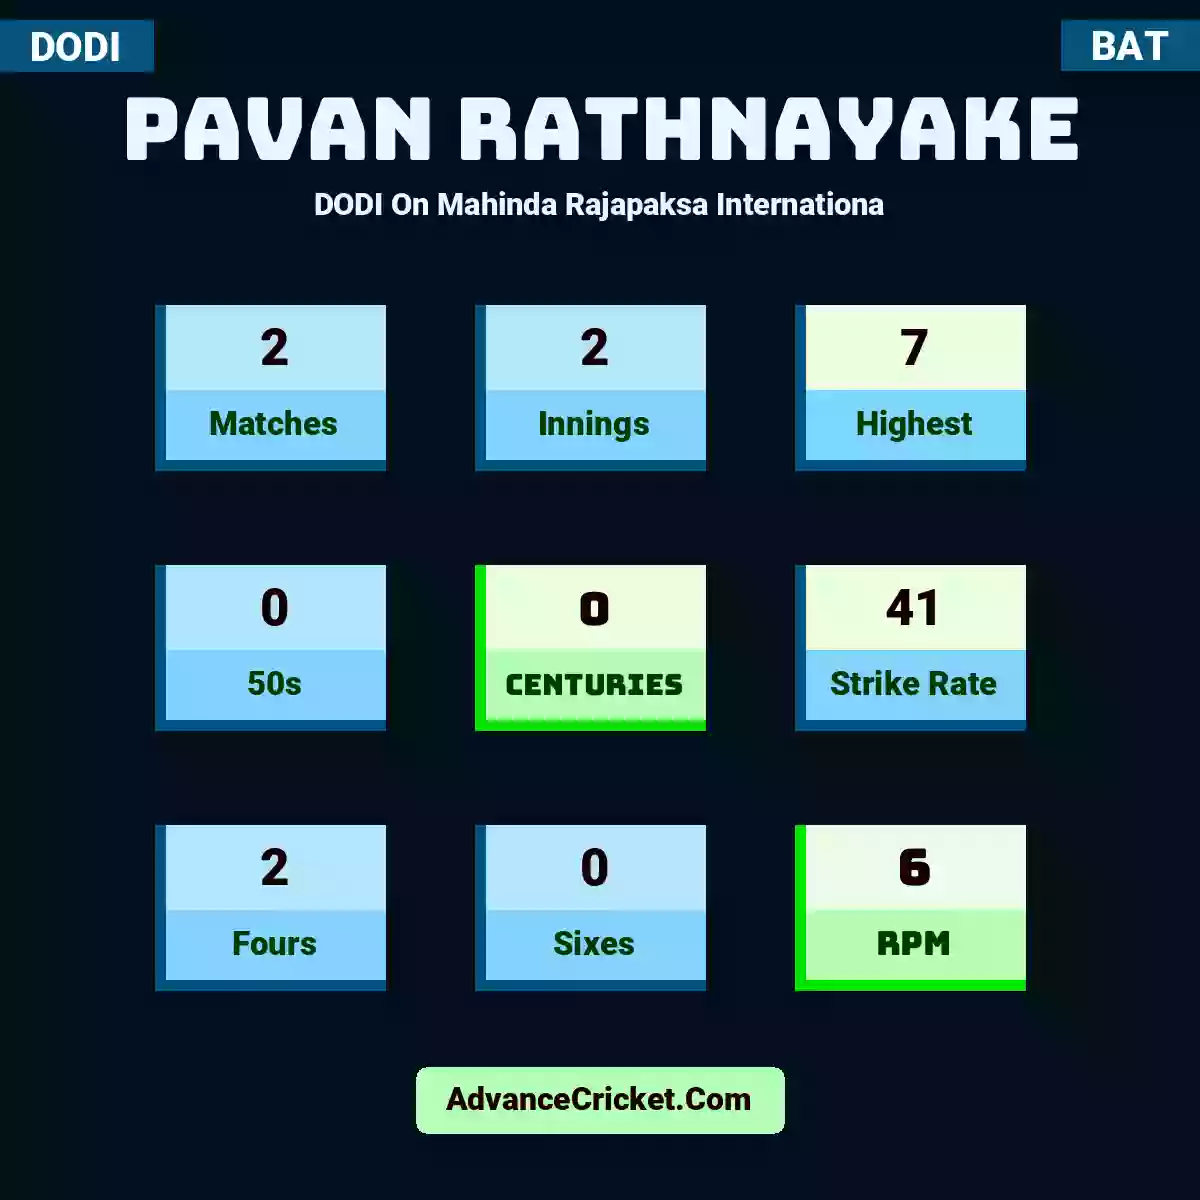 Pavan Rathnayake DODI  On Mahinda Rajapaksa Internationa, Pavan Rathnayake played 2 matches, scored 7 runs as highest, 0 half-centuries, and 0 centuries, with a strike rate of 41. P.Rathnayake hit 2 fours and 0 sixes, with an RPM of 6.